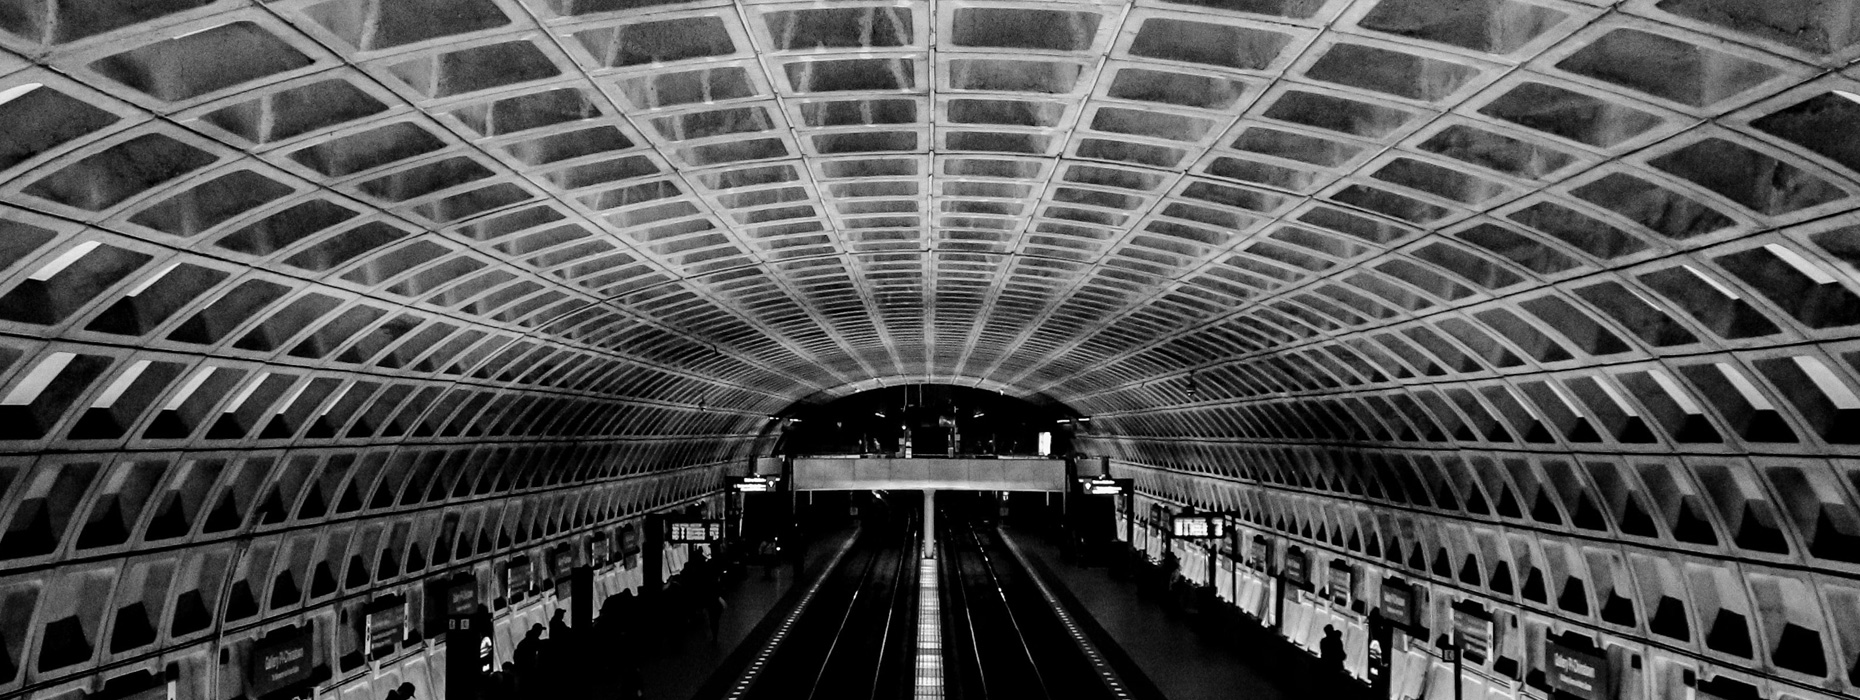 Image of a DC Metro subway station.